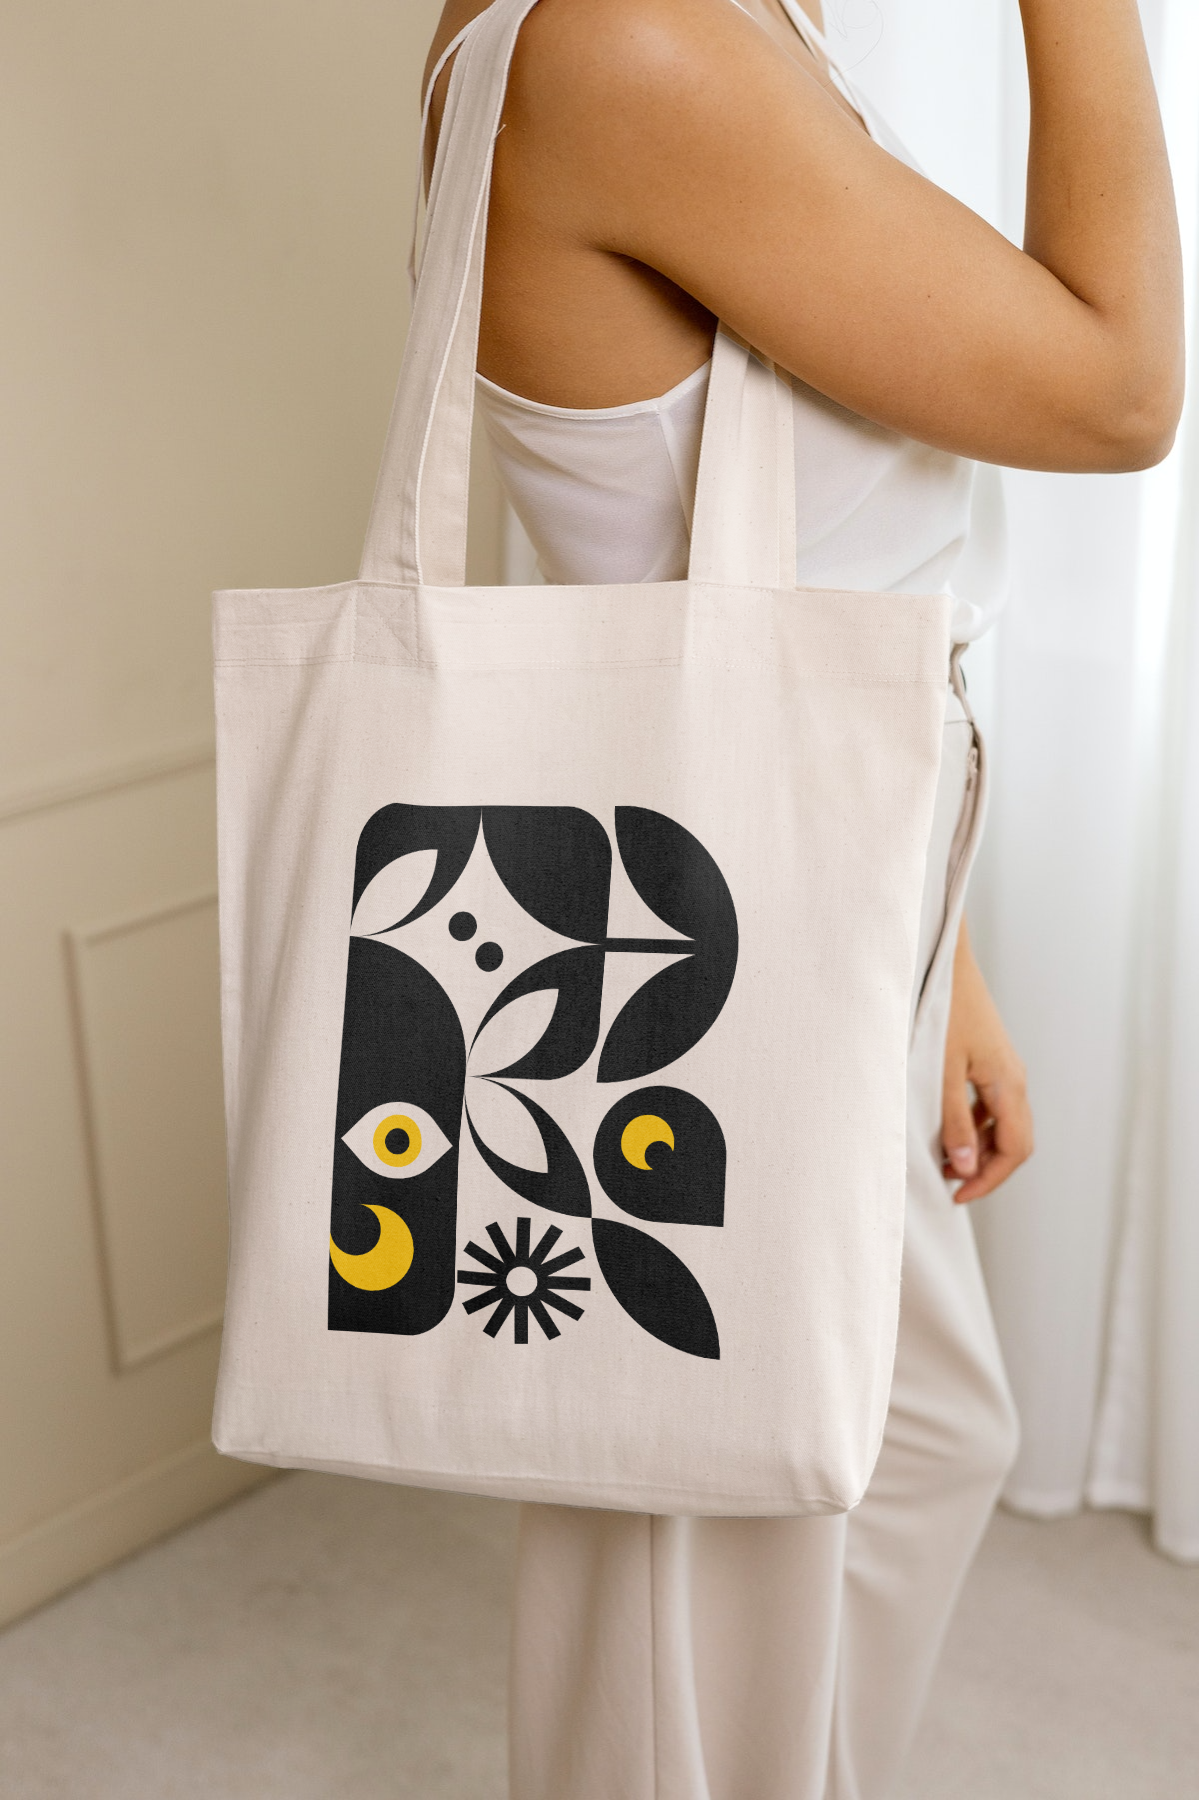 23 tote bag designs that pop! | Good Things Blog